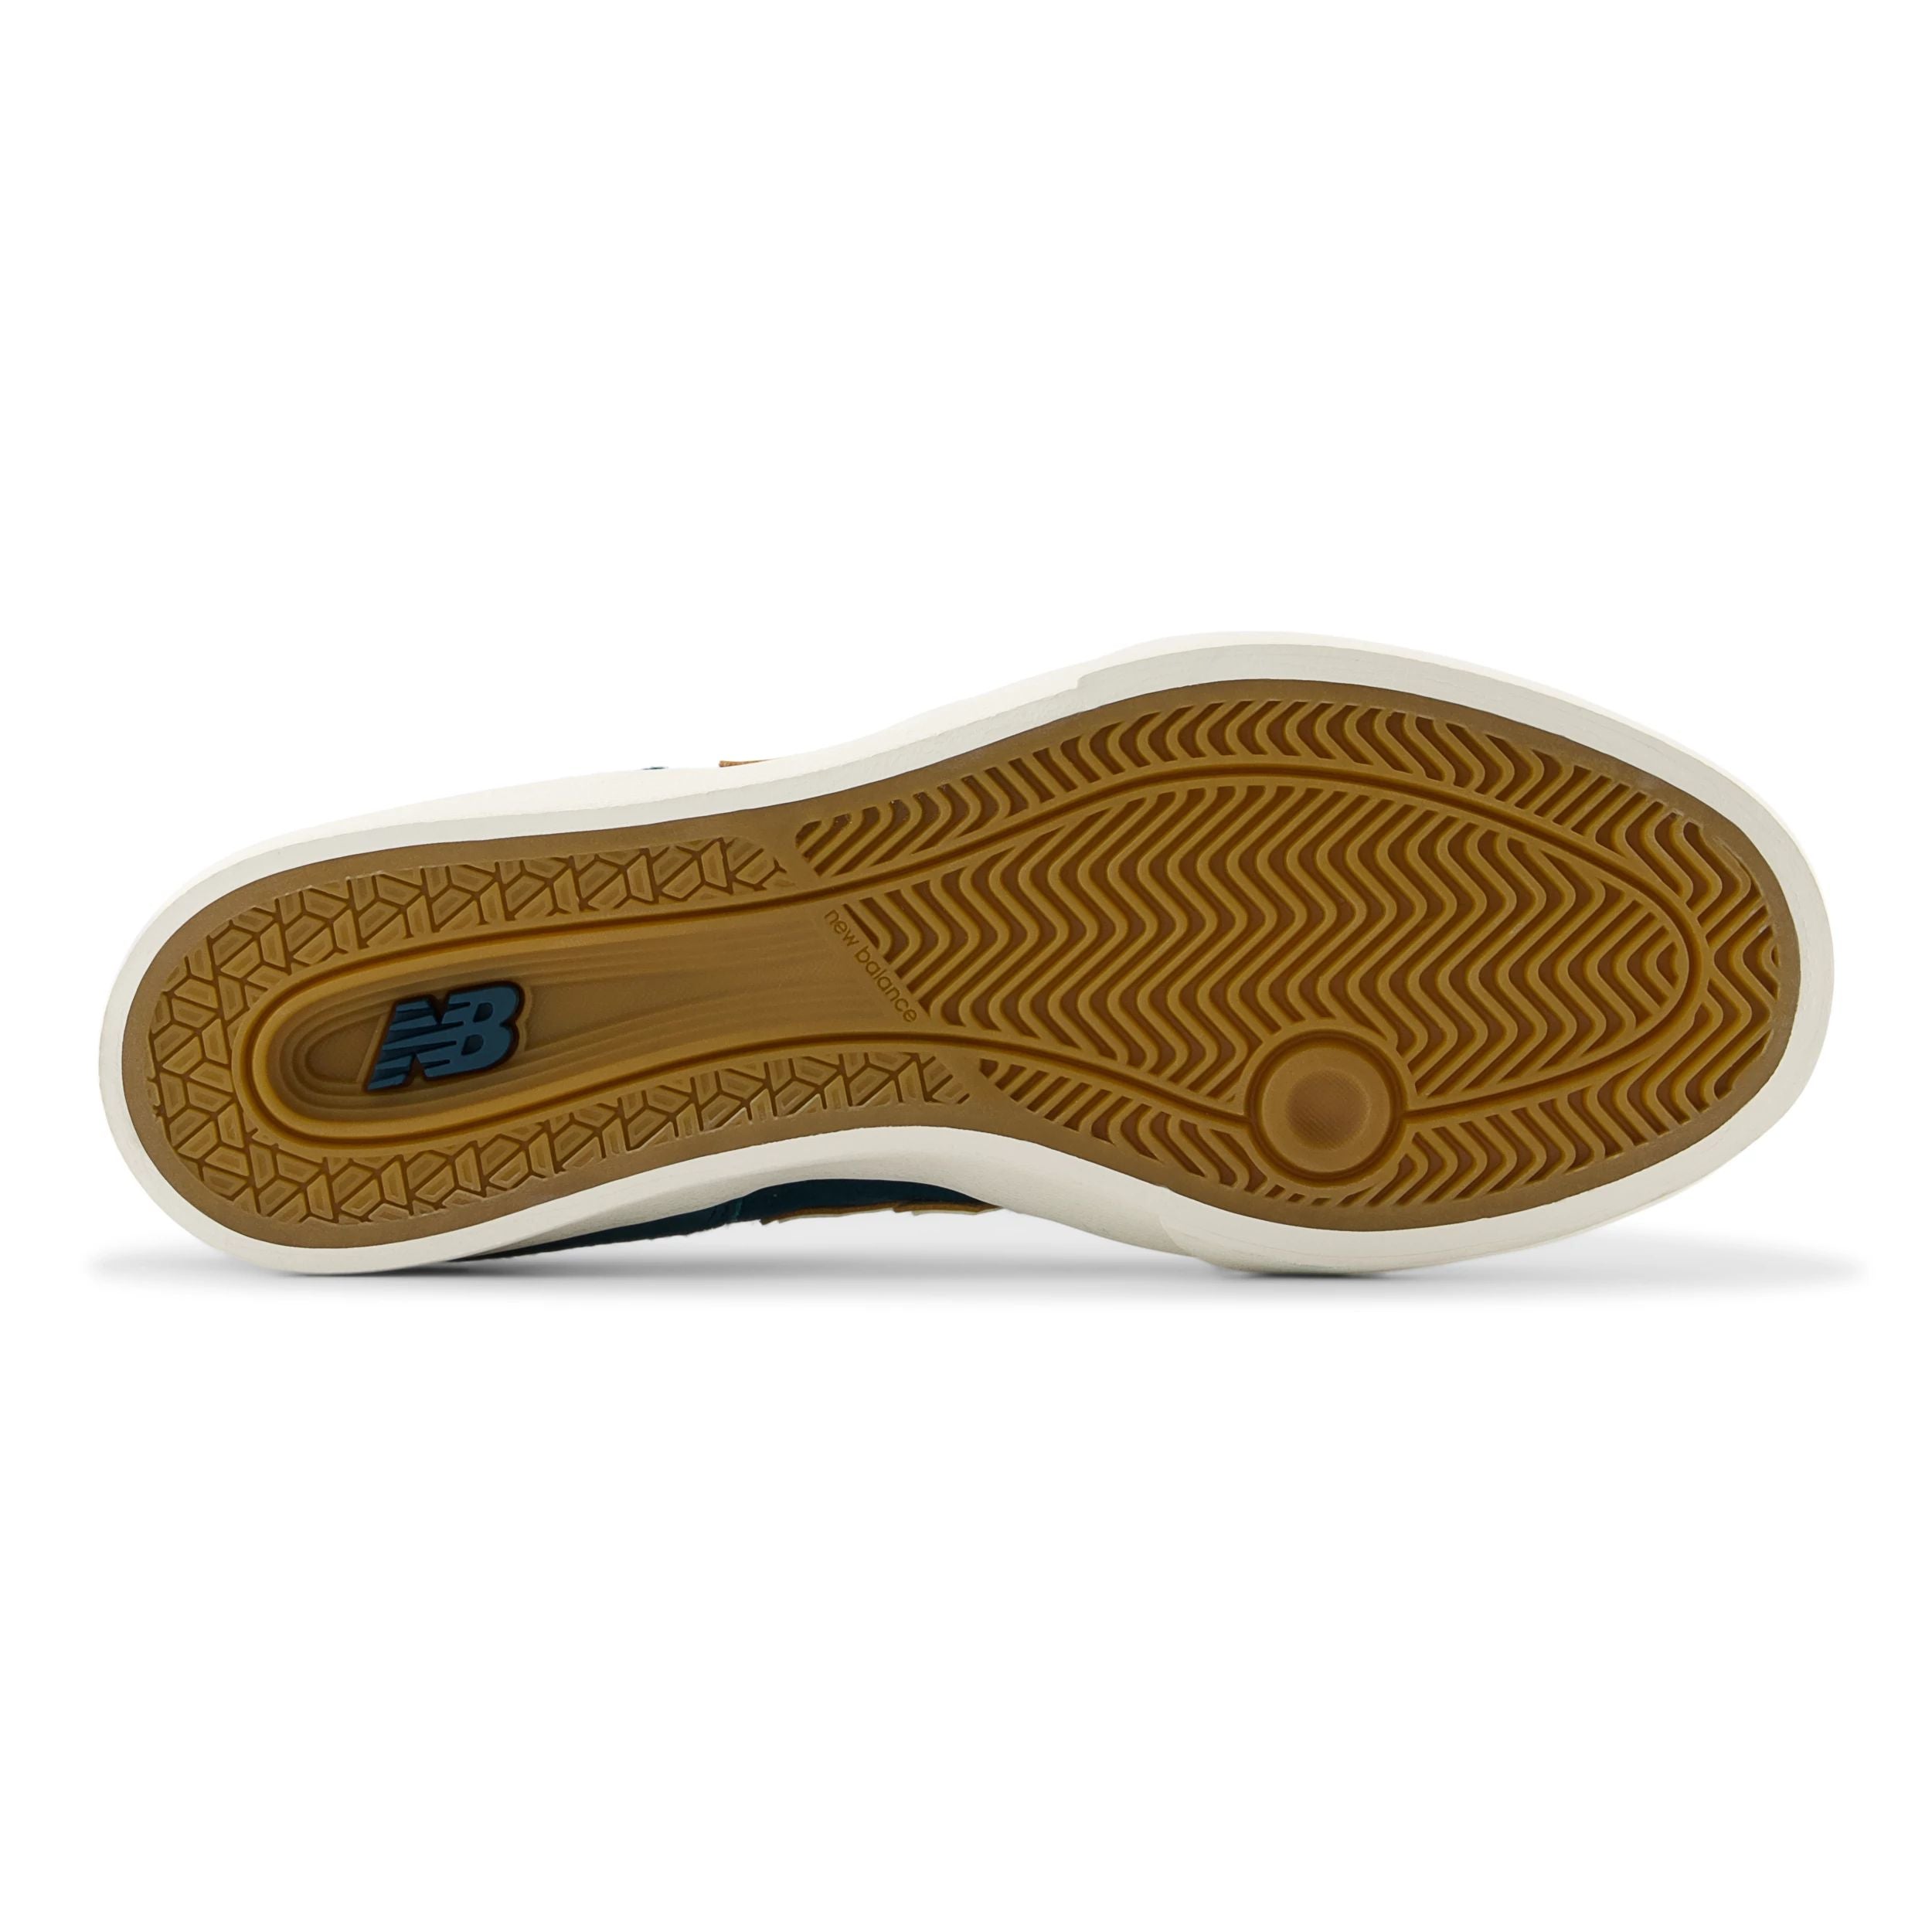 Spruce NM574 Vulc NB Numeric Skate Shoe Bottom